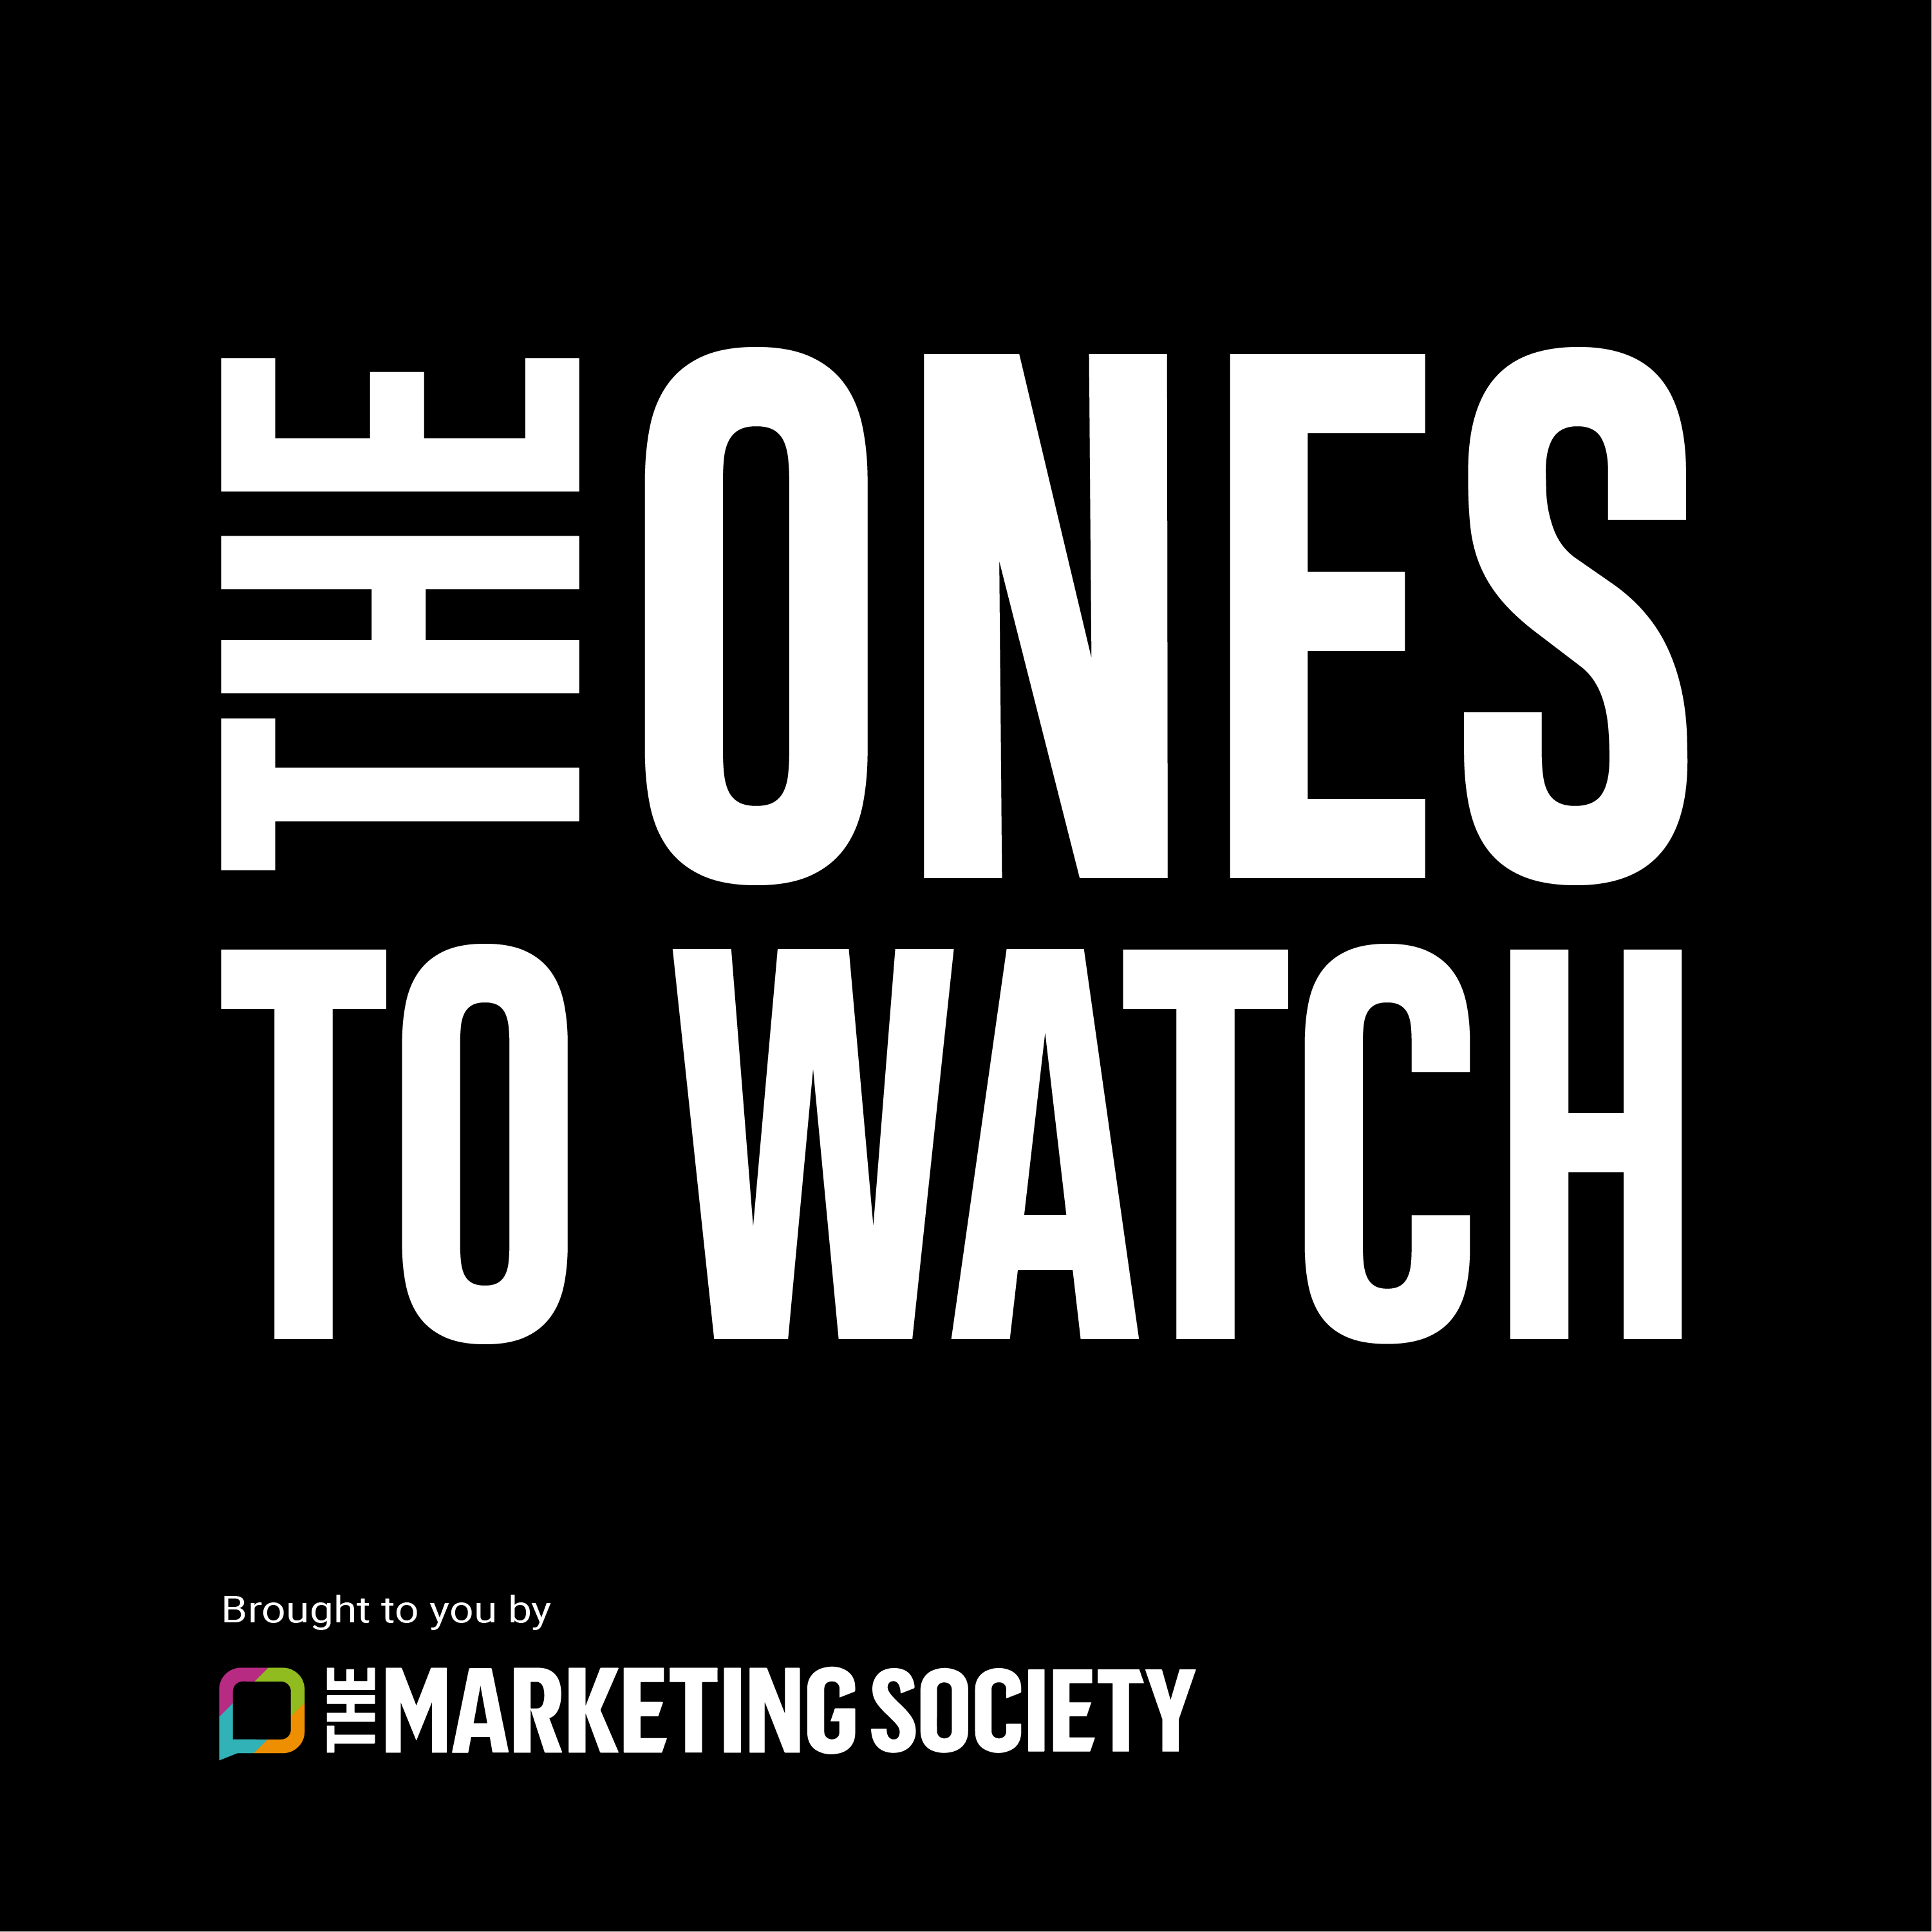 The Onestowatch The Marketing Society